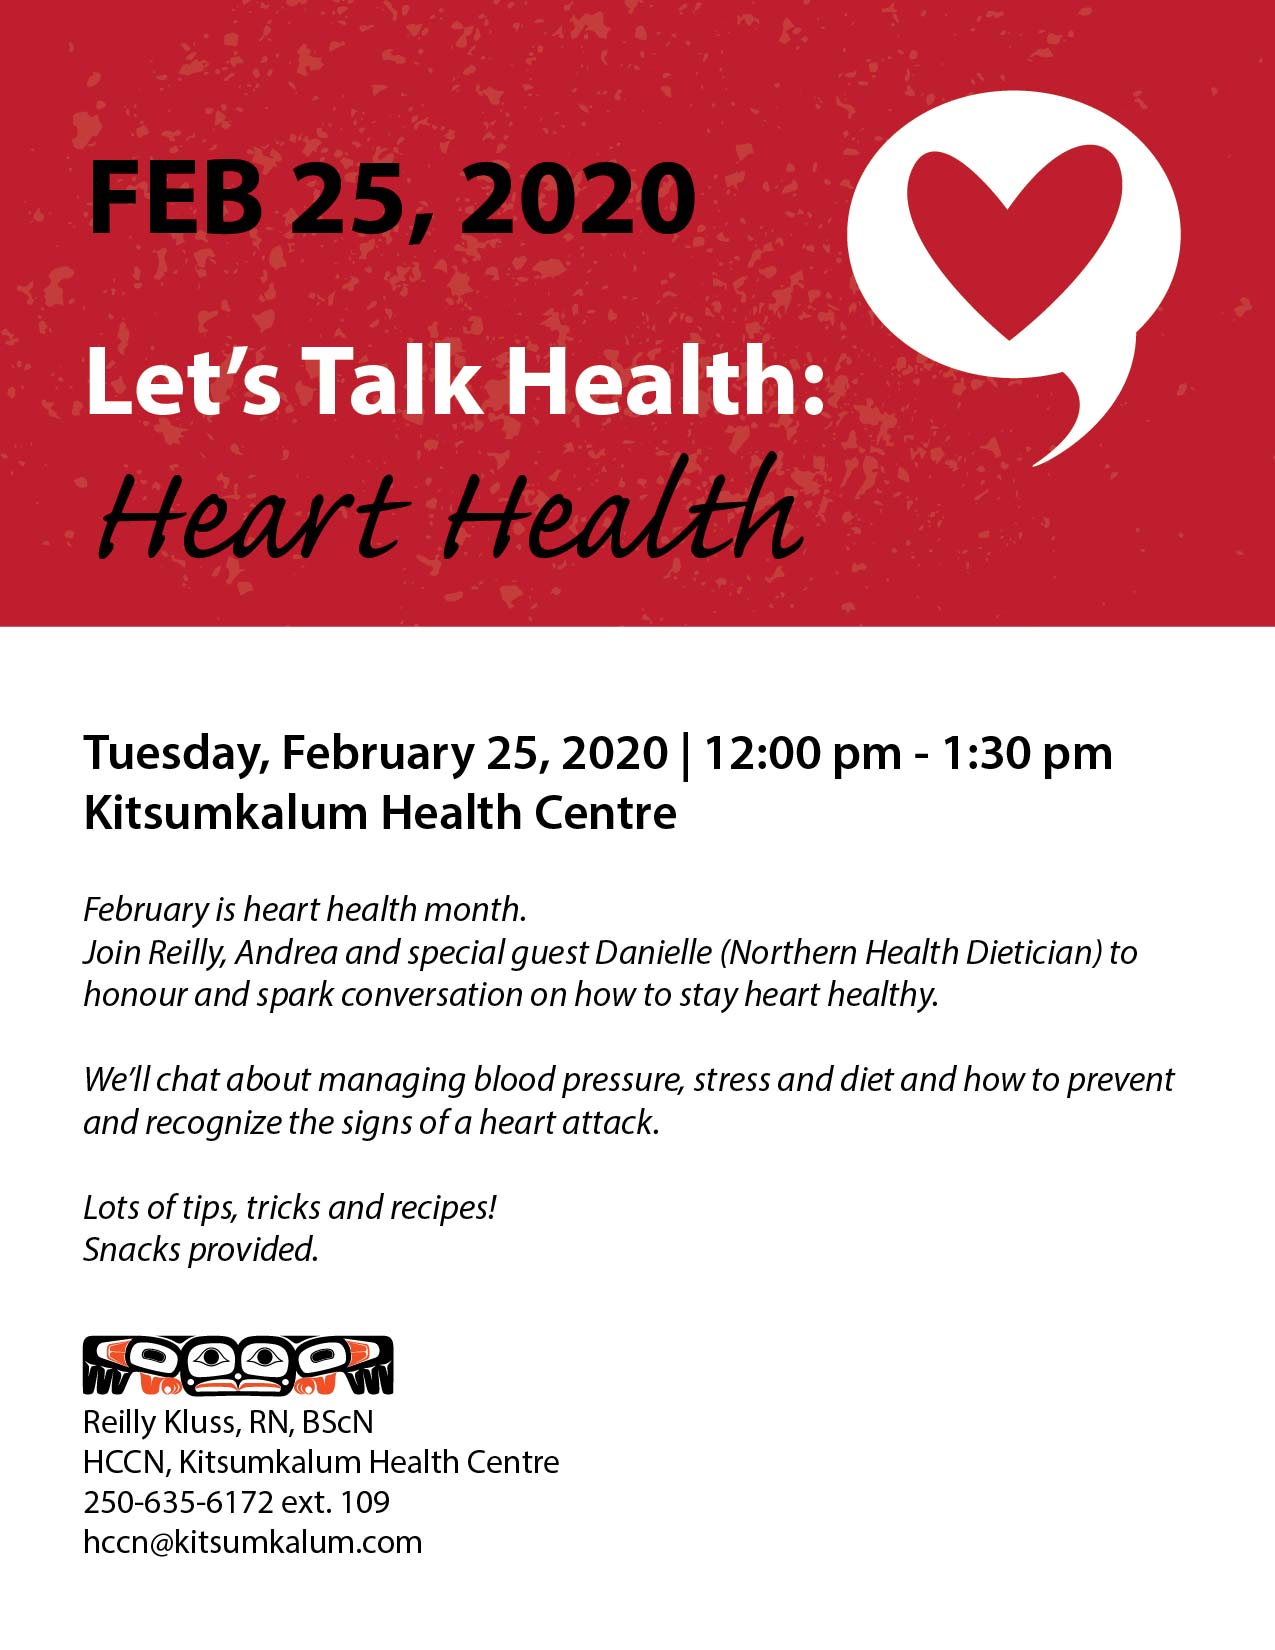 Let’s Talk Health: Heart Health FEB 25